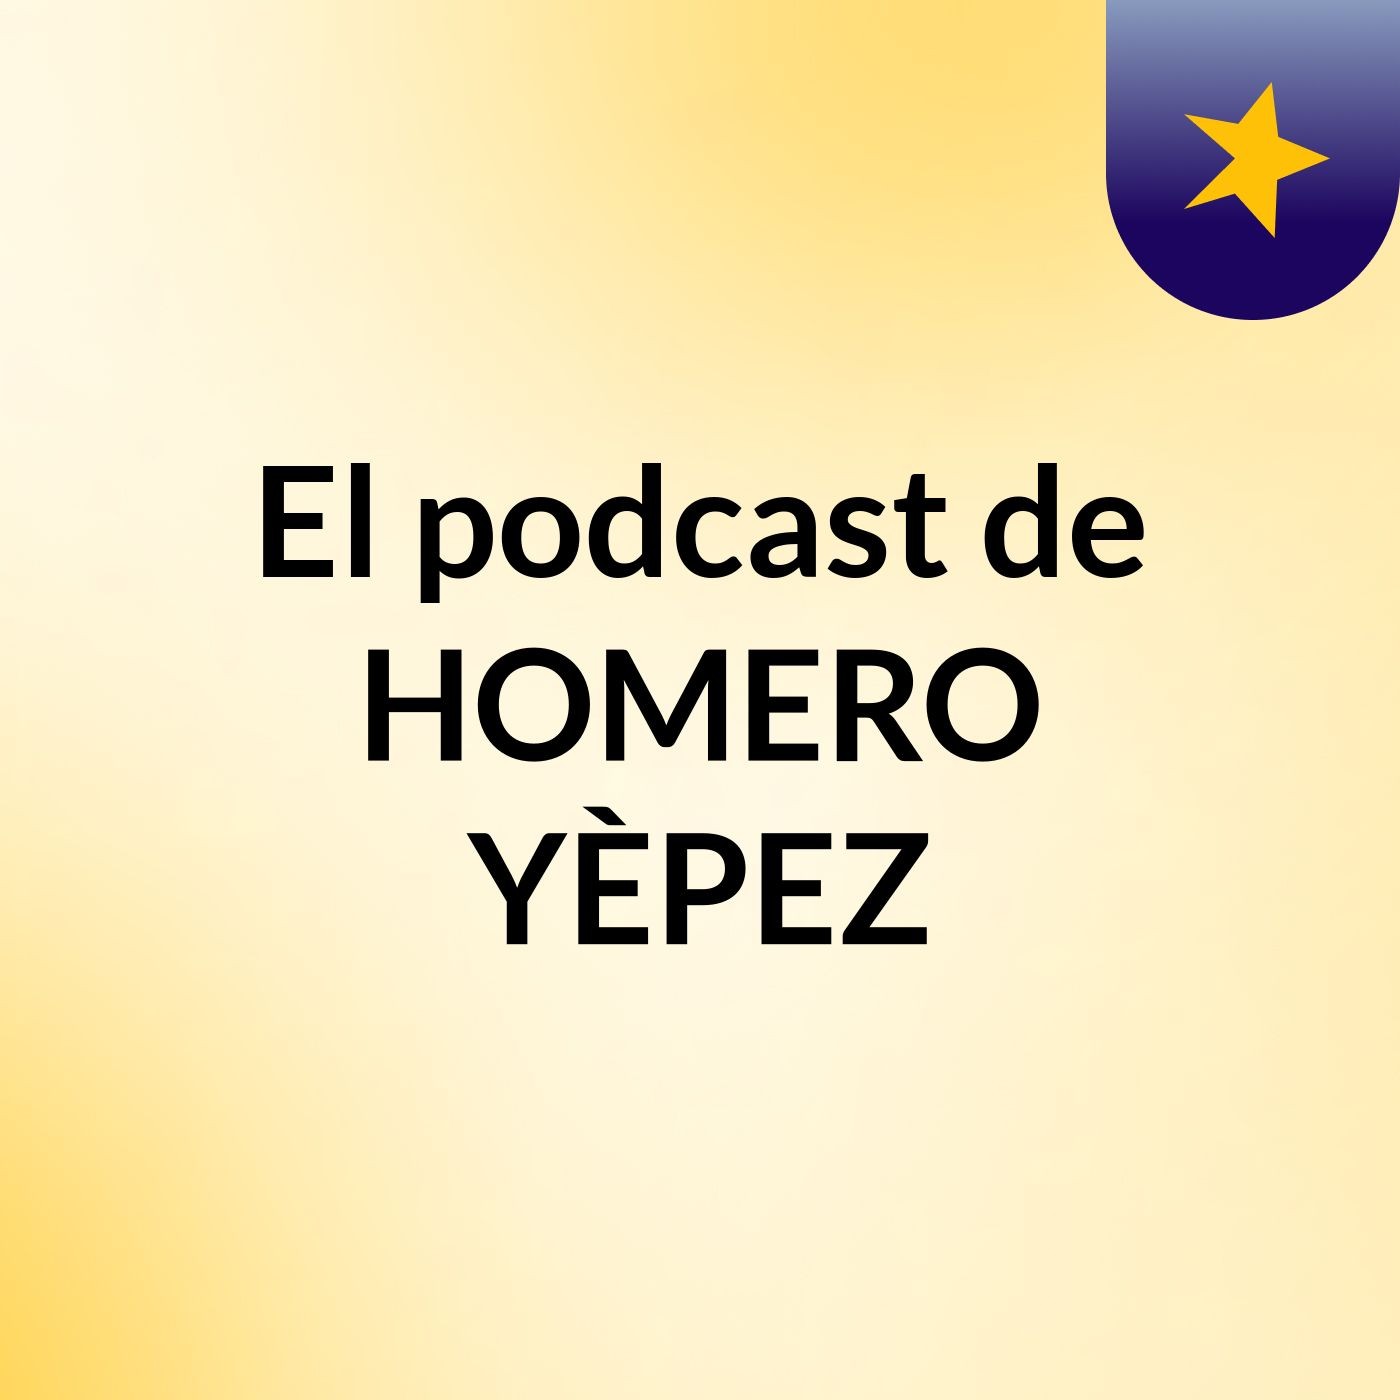 Episodio 6 - El podcast de HOMERO YÈPEZ